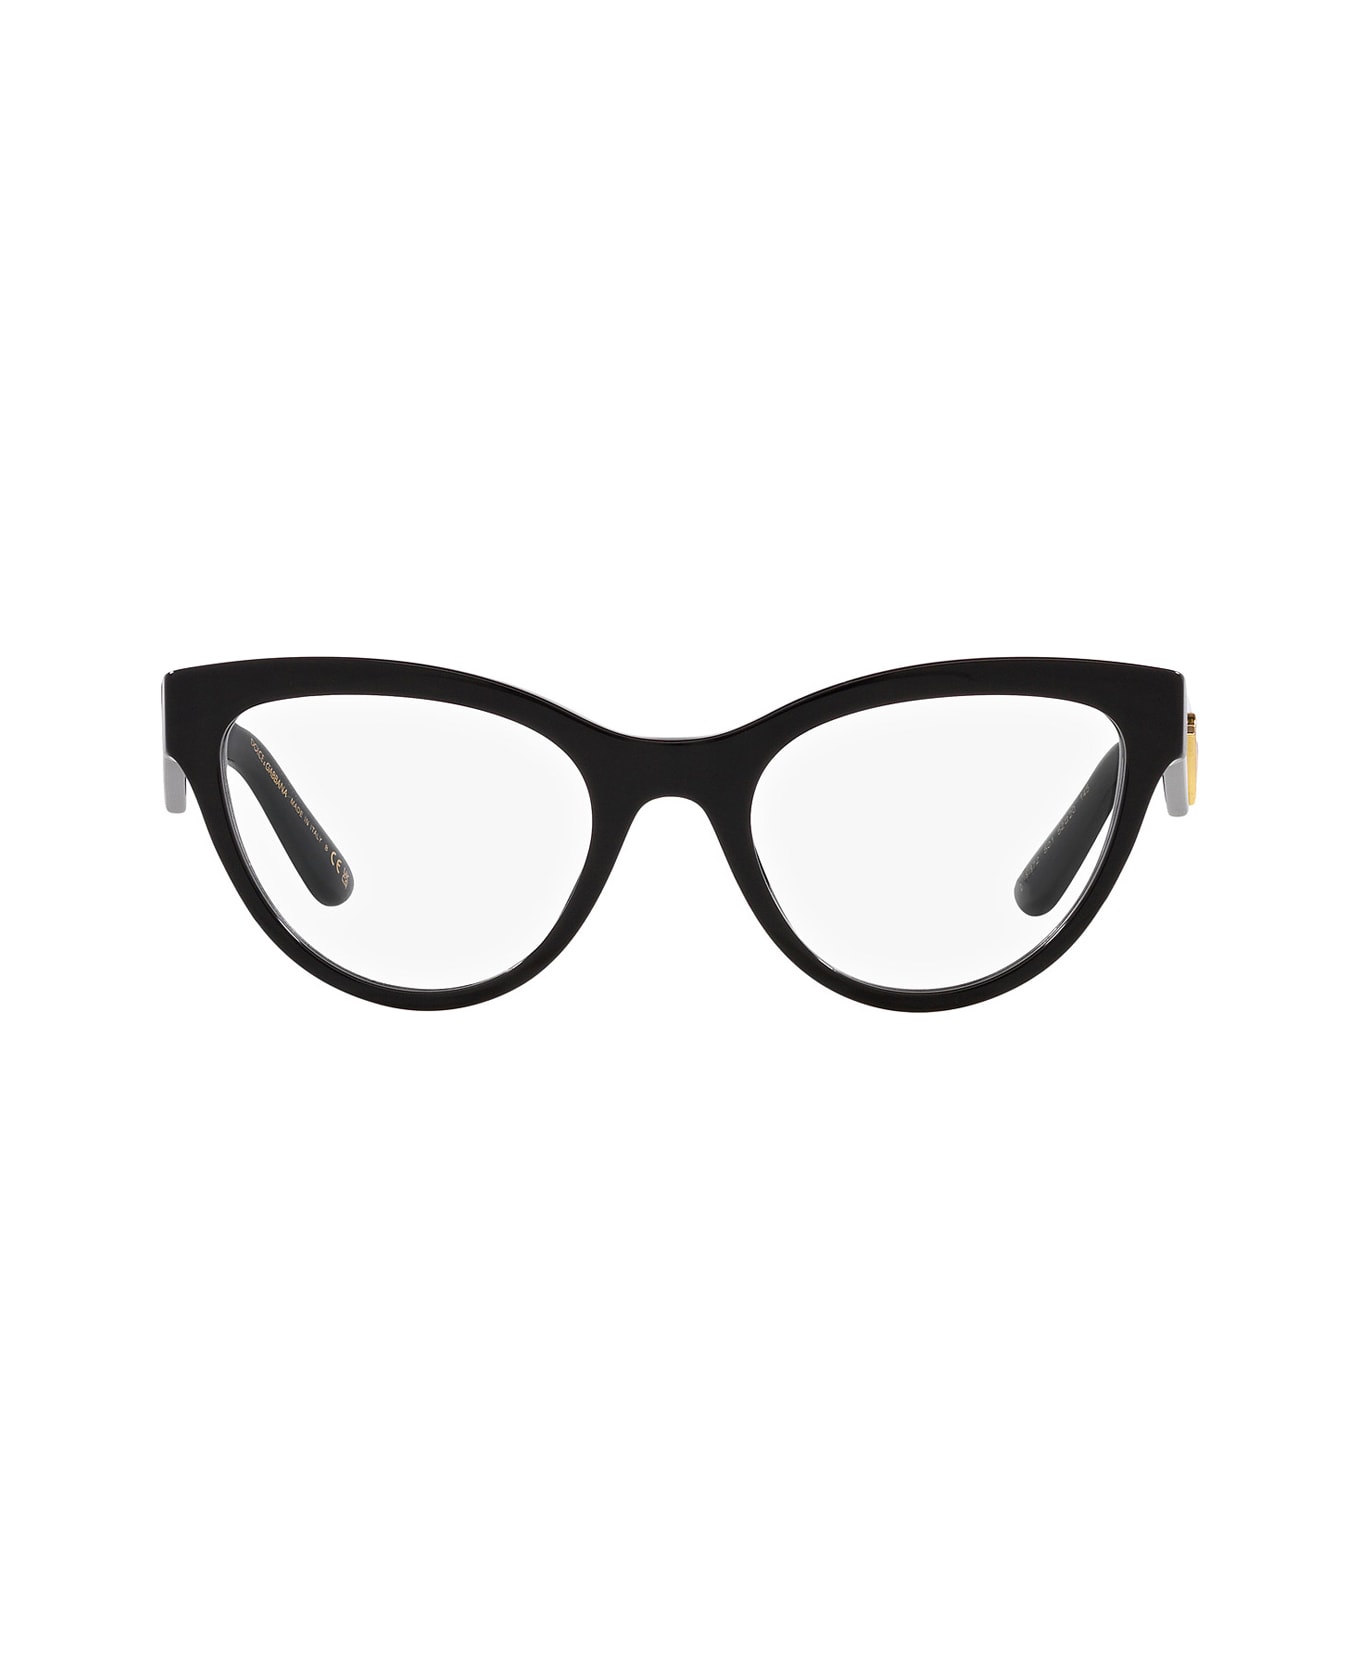 Dolce & Gabbana Eyewear Dg3372 501 Glasses - Nero アイウェア